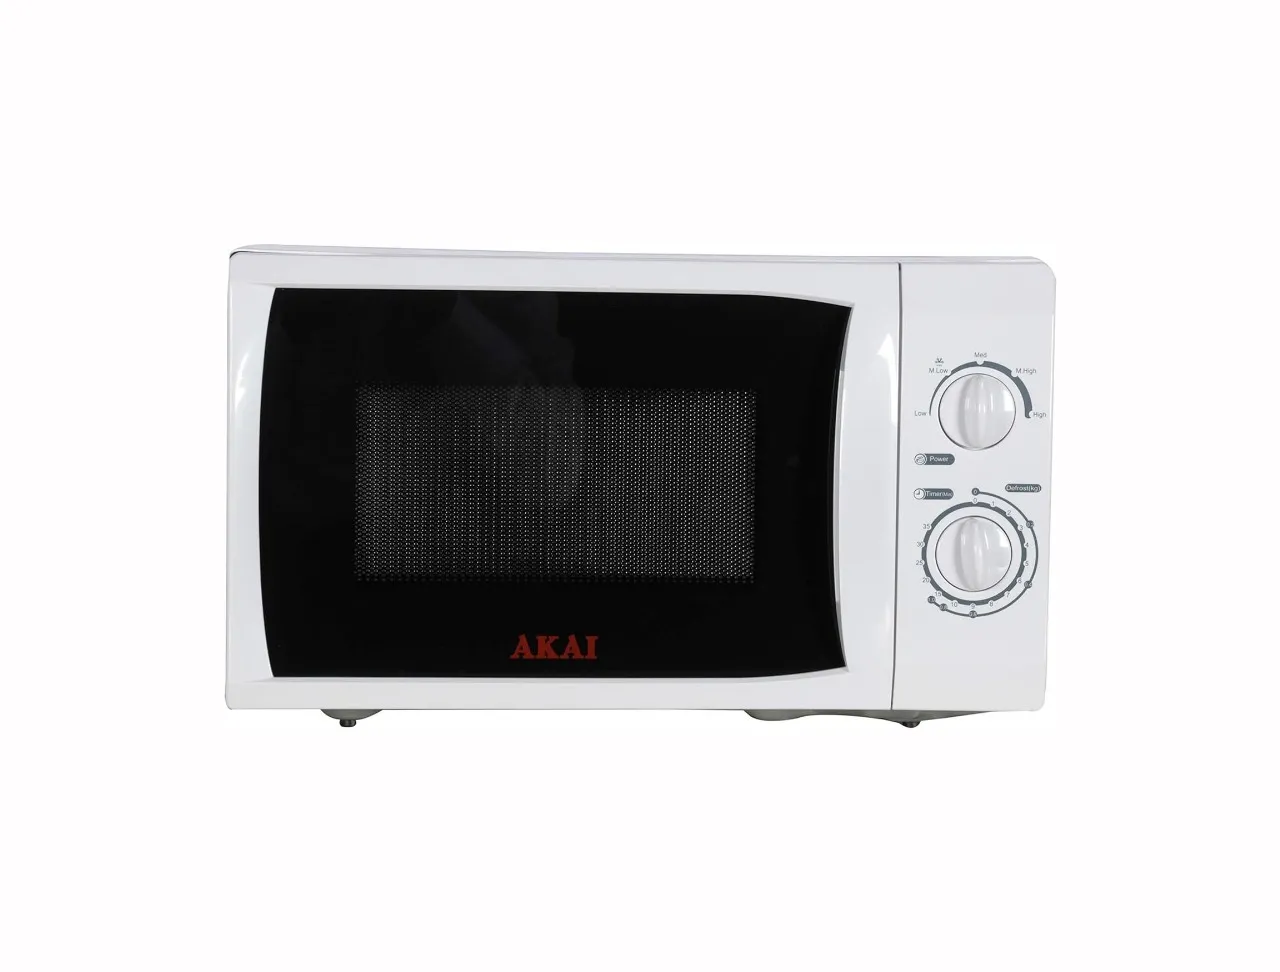 Akai 20 Liter Microwave Oven 700 Watts Color White Model | MWMA-M21MW | 1 Year Warranty.